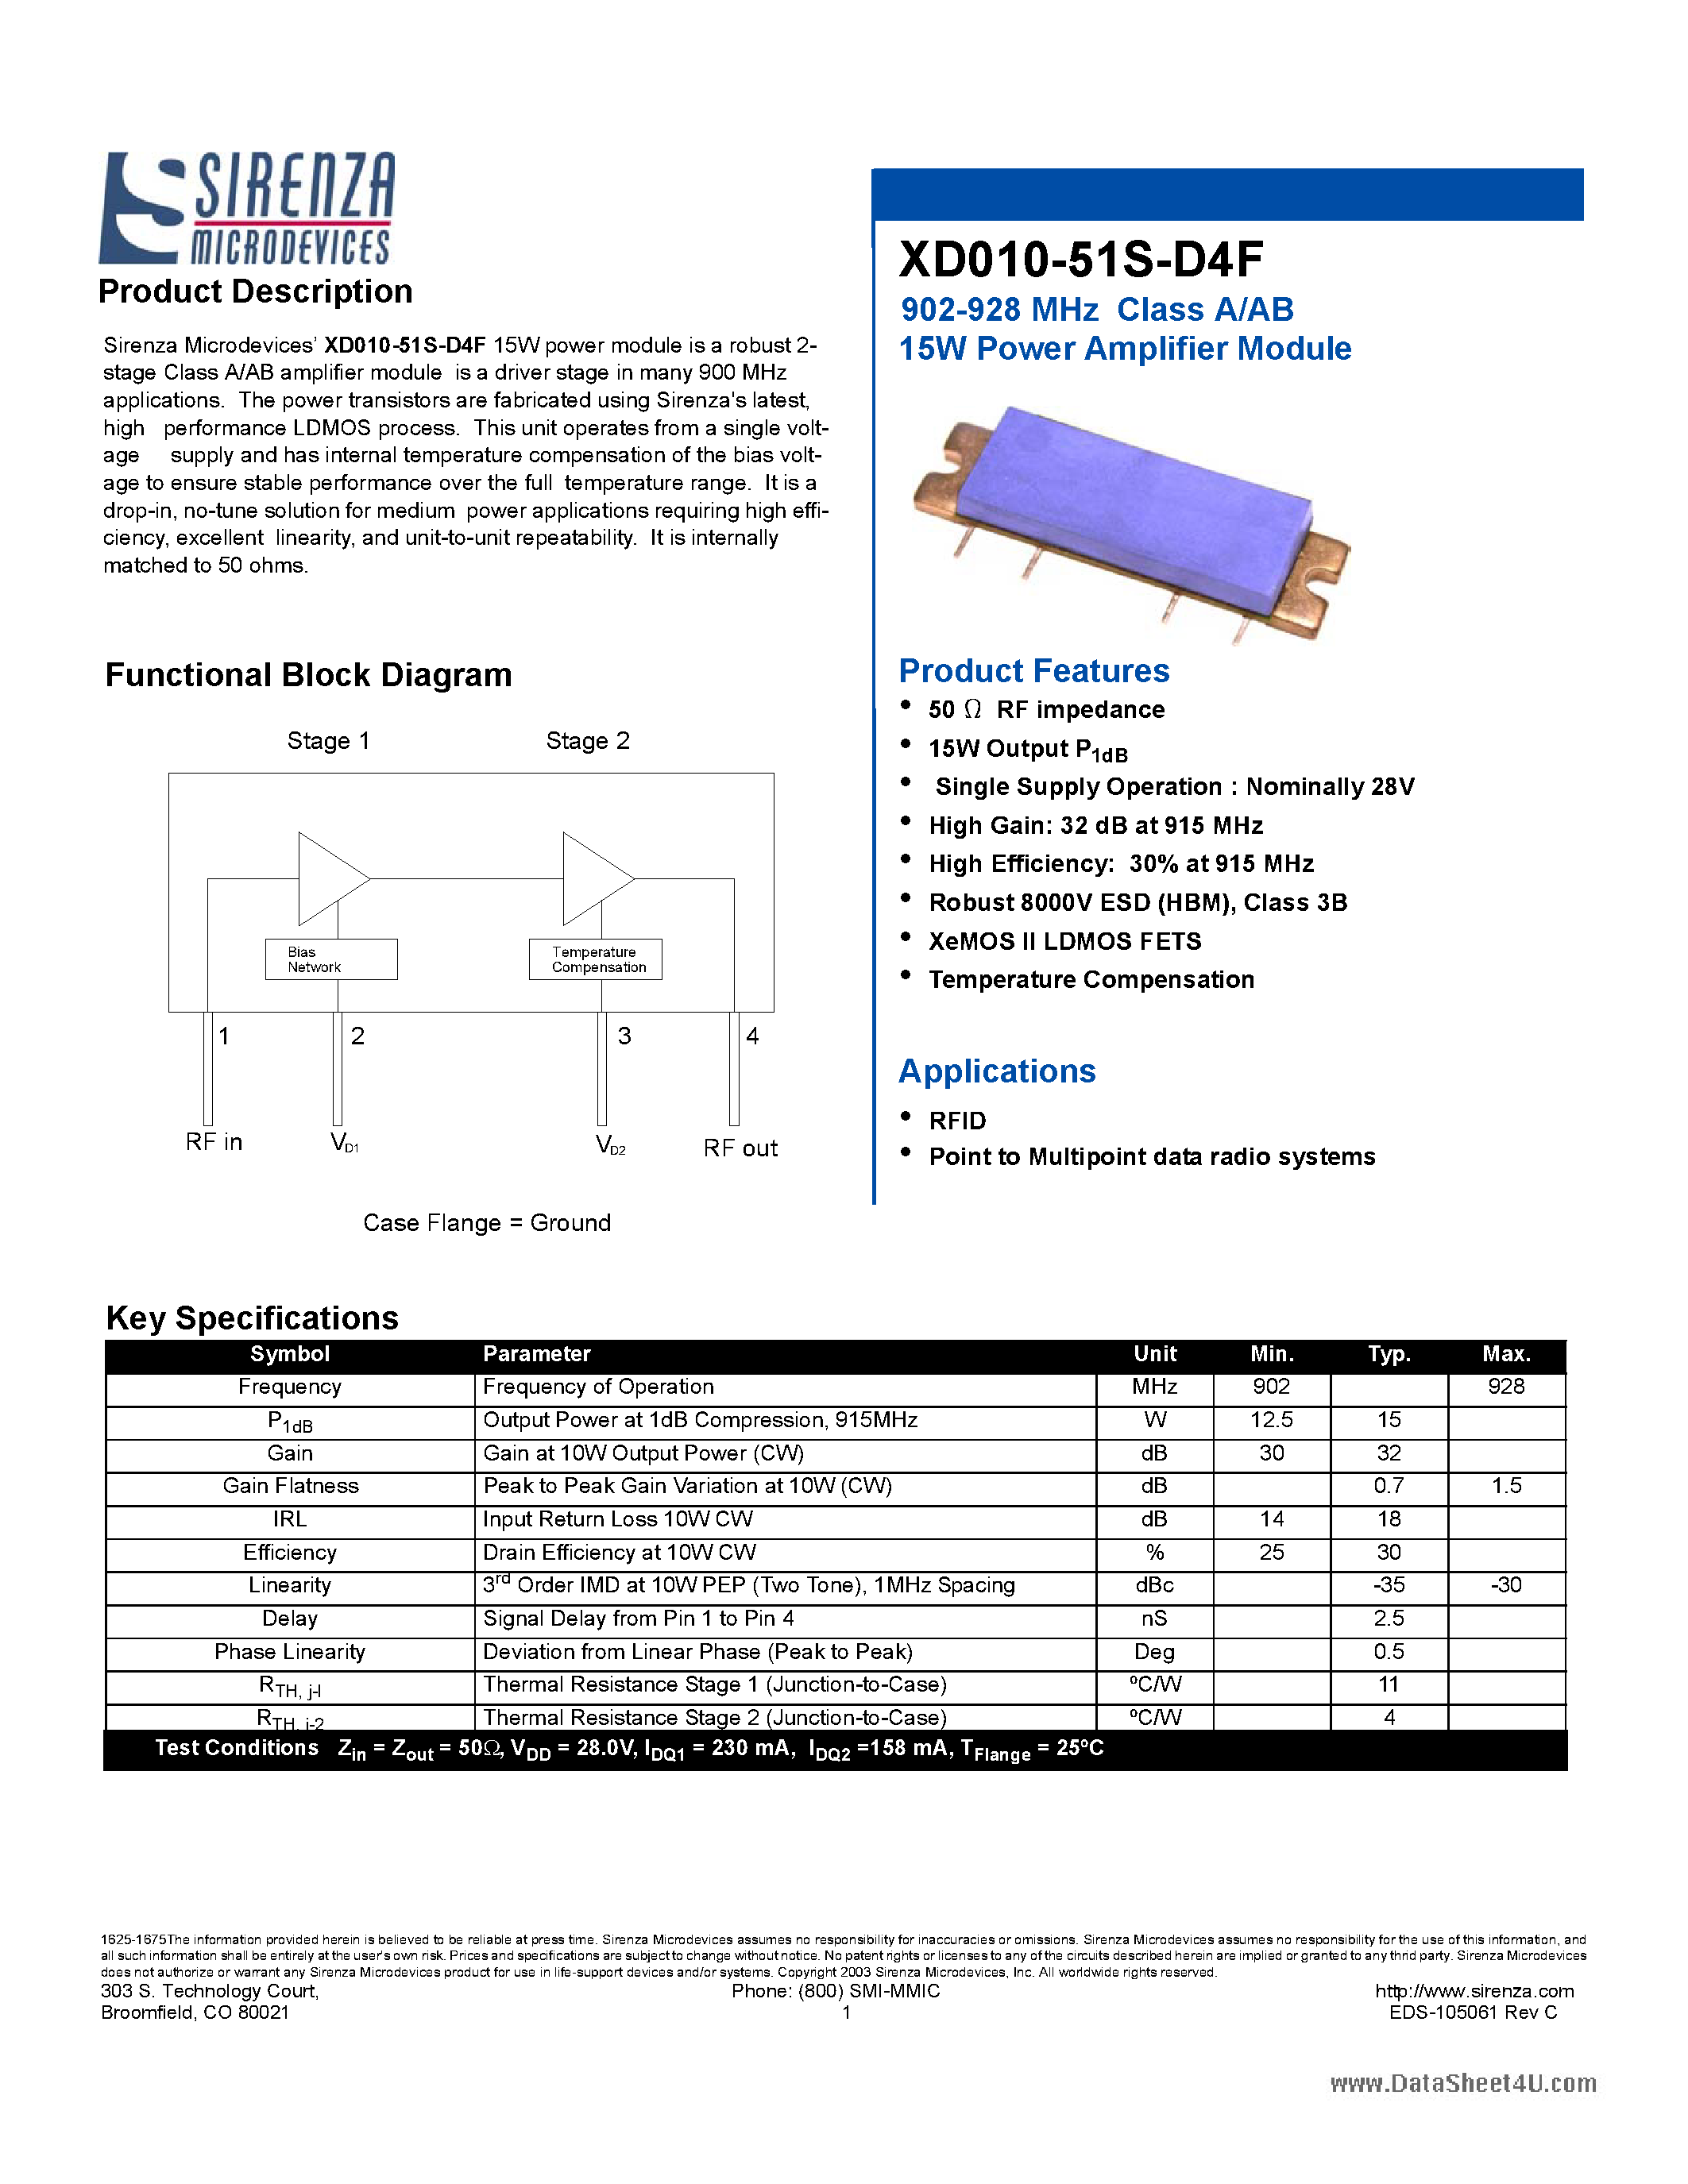 Даташит XD010-51S-D4F - Class A/AB 15W Power Amplifier Module страница 1